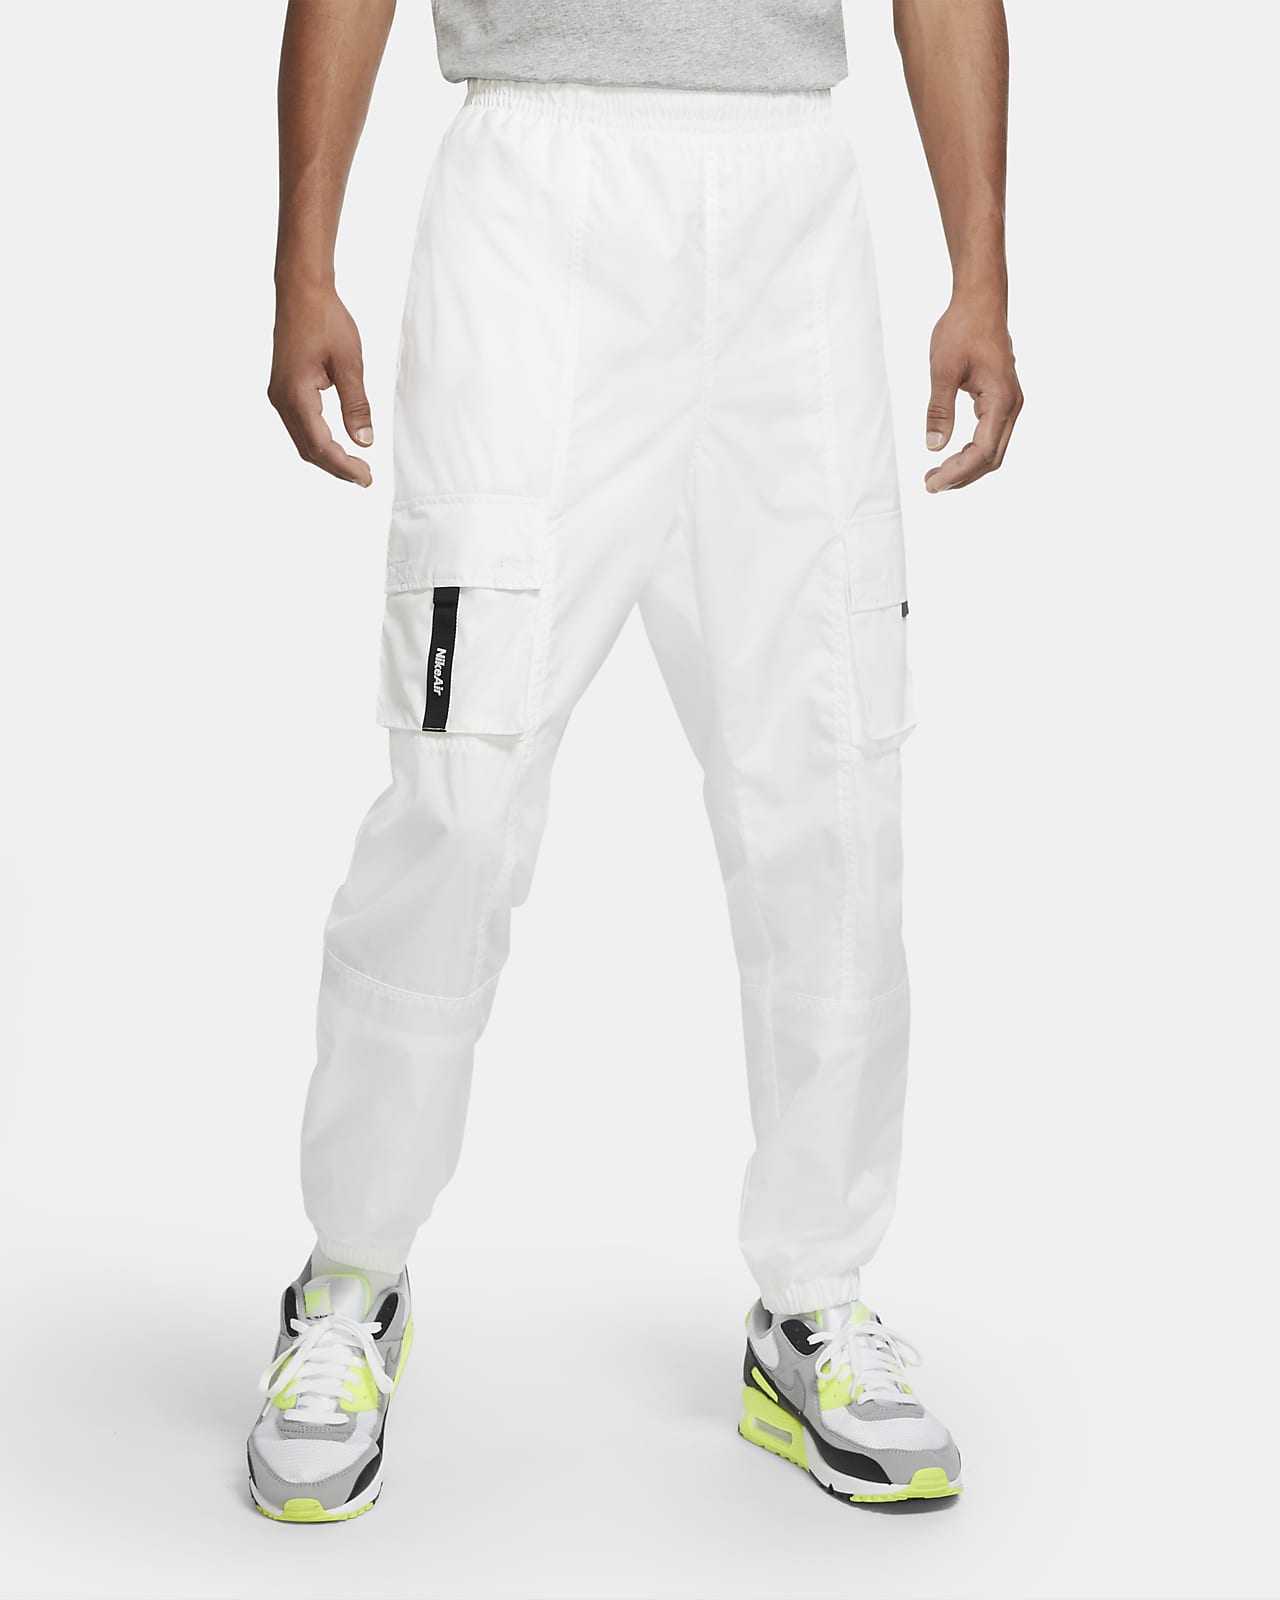 Pantalones de tejido Woven para hombre Nike Air